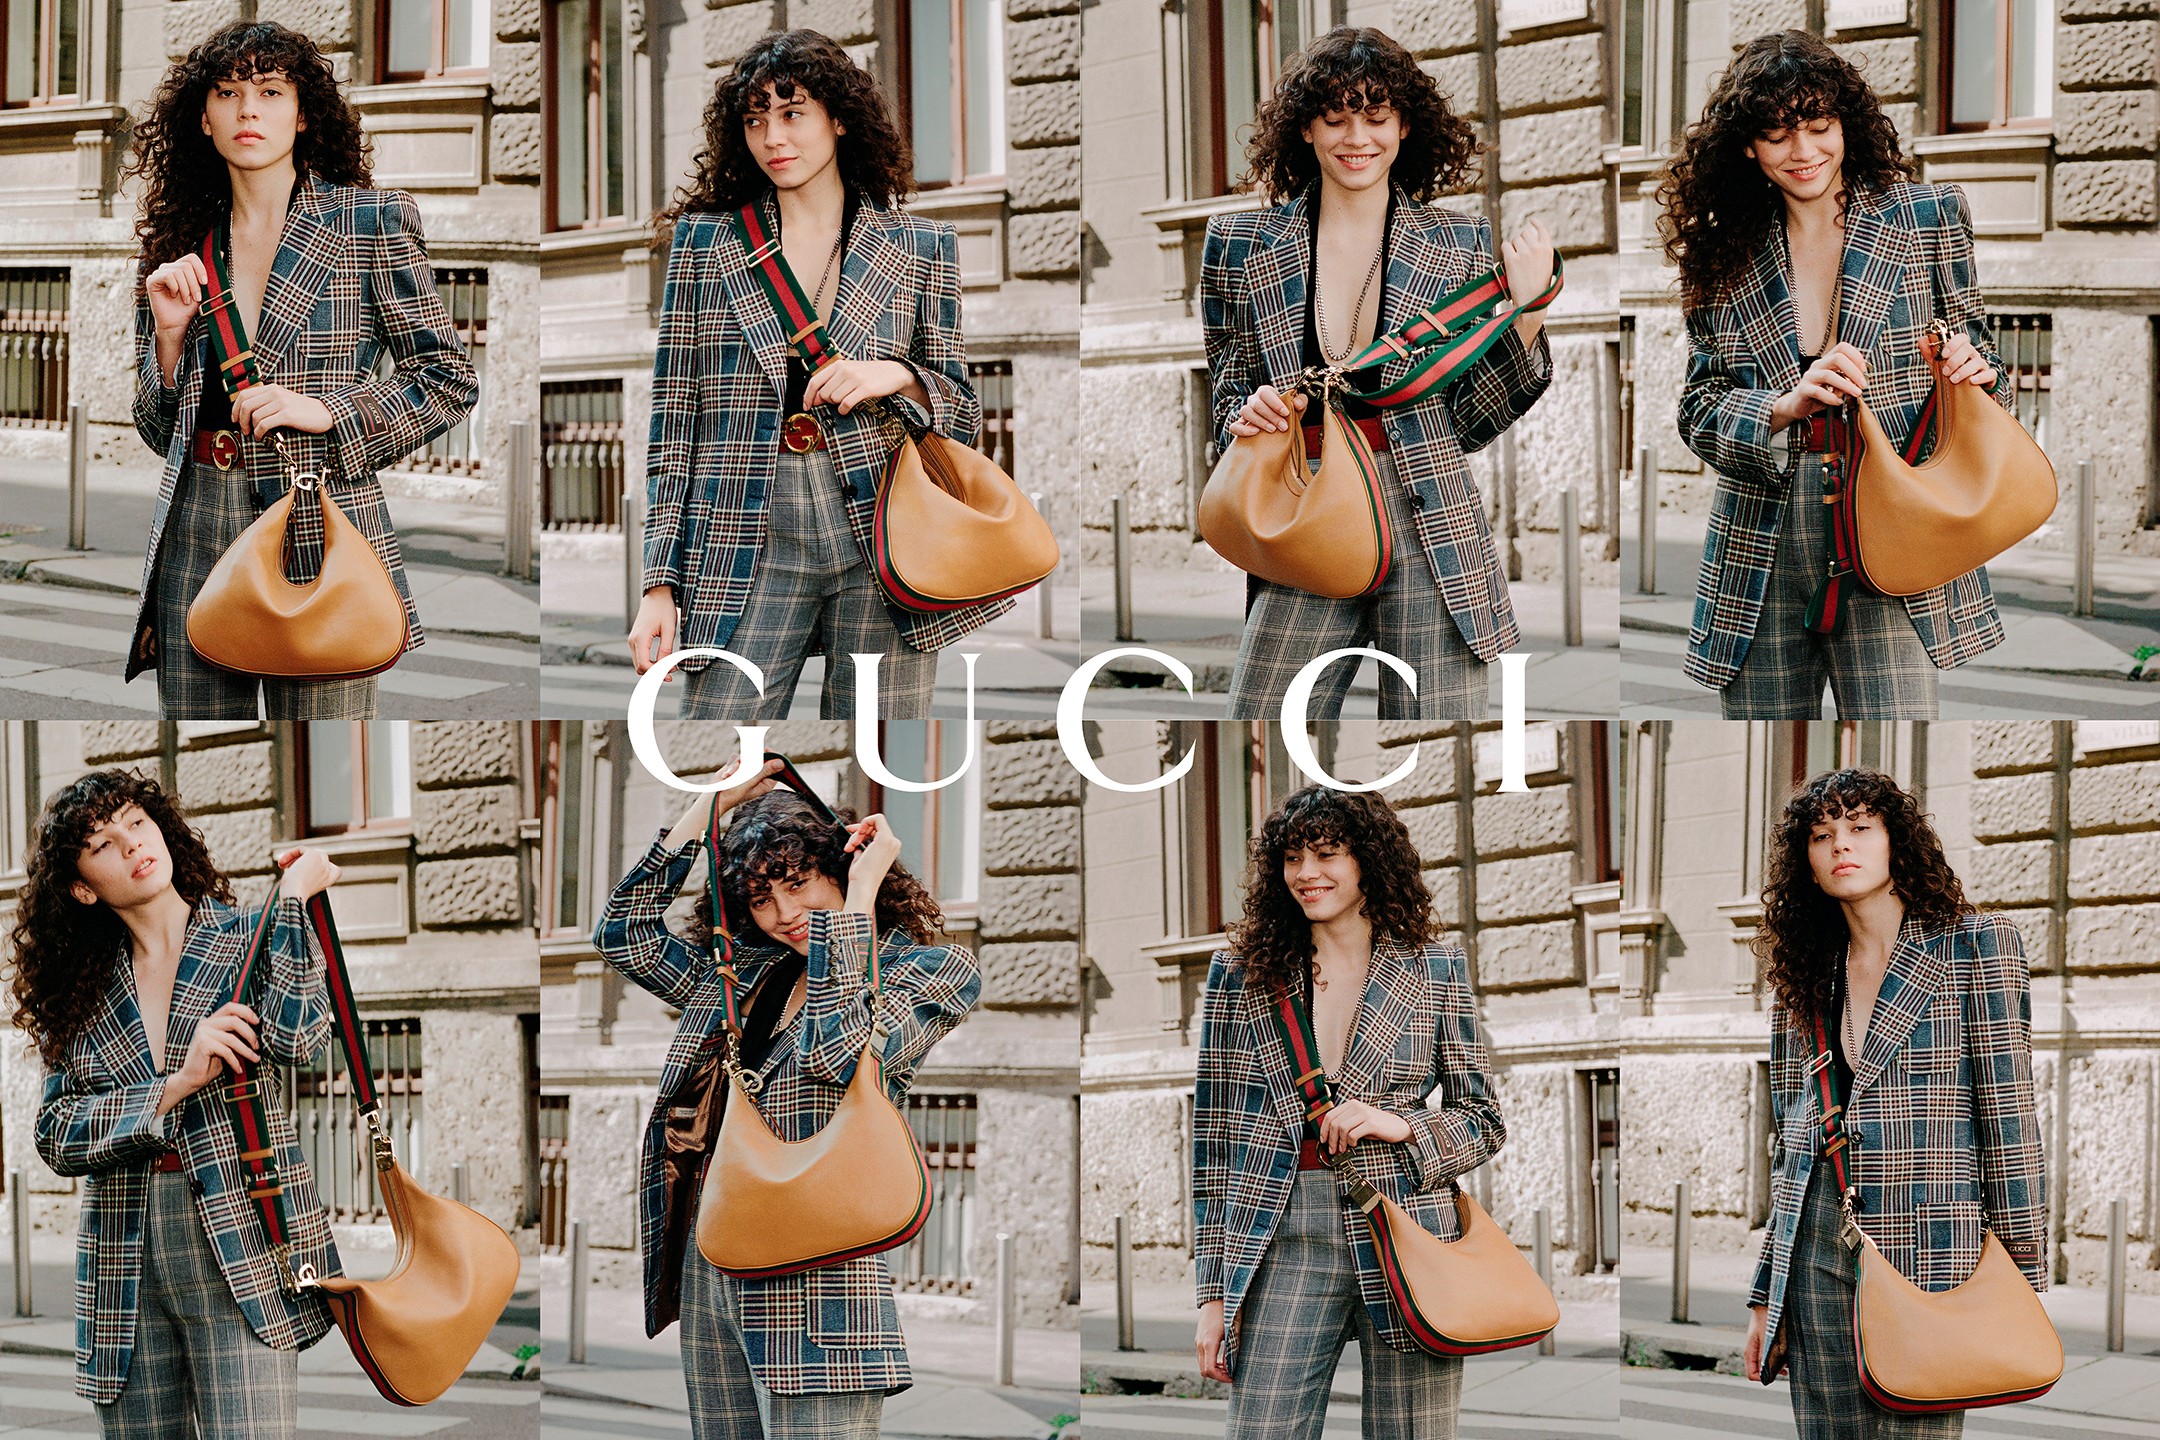 Gucci Medium Full Moon Hobo Bag